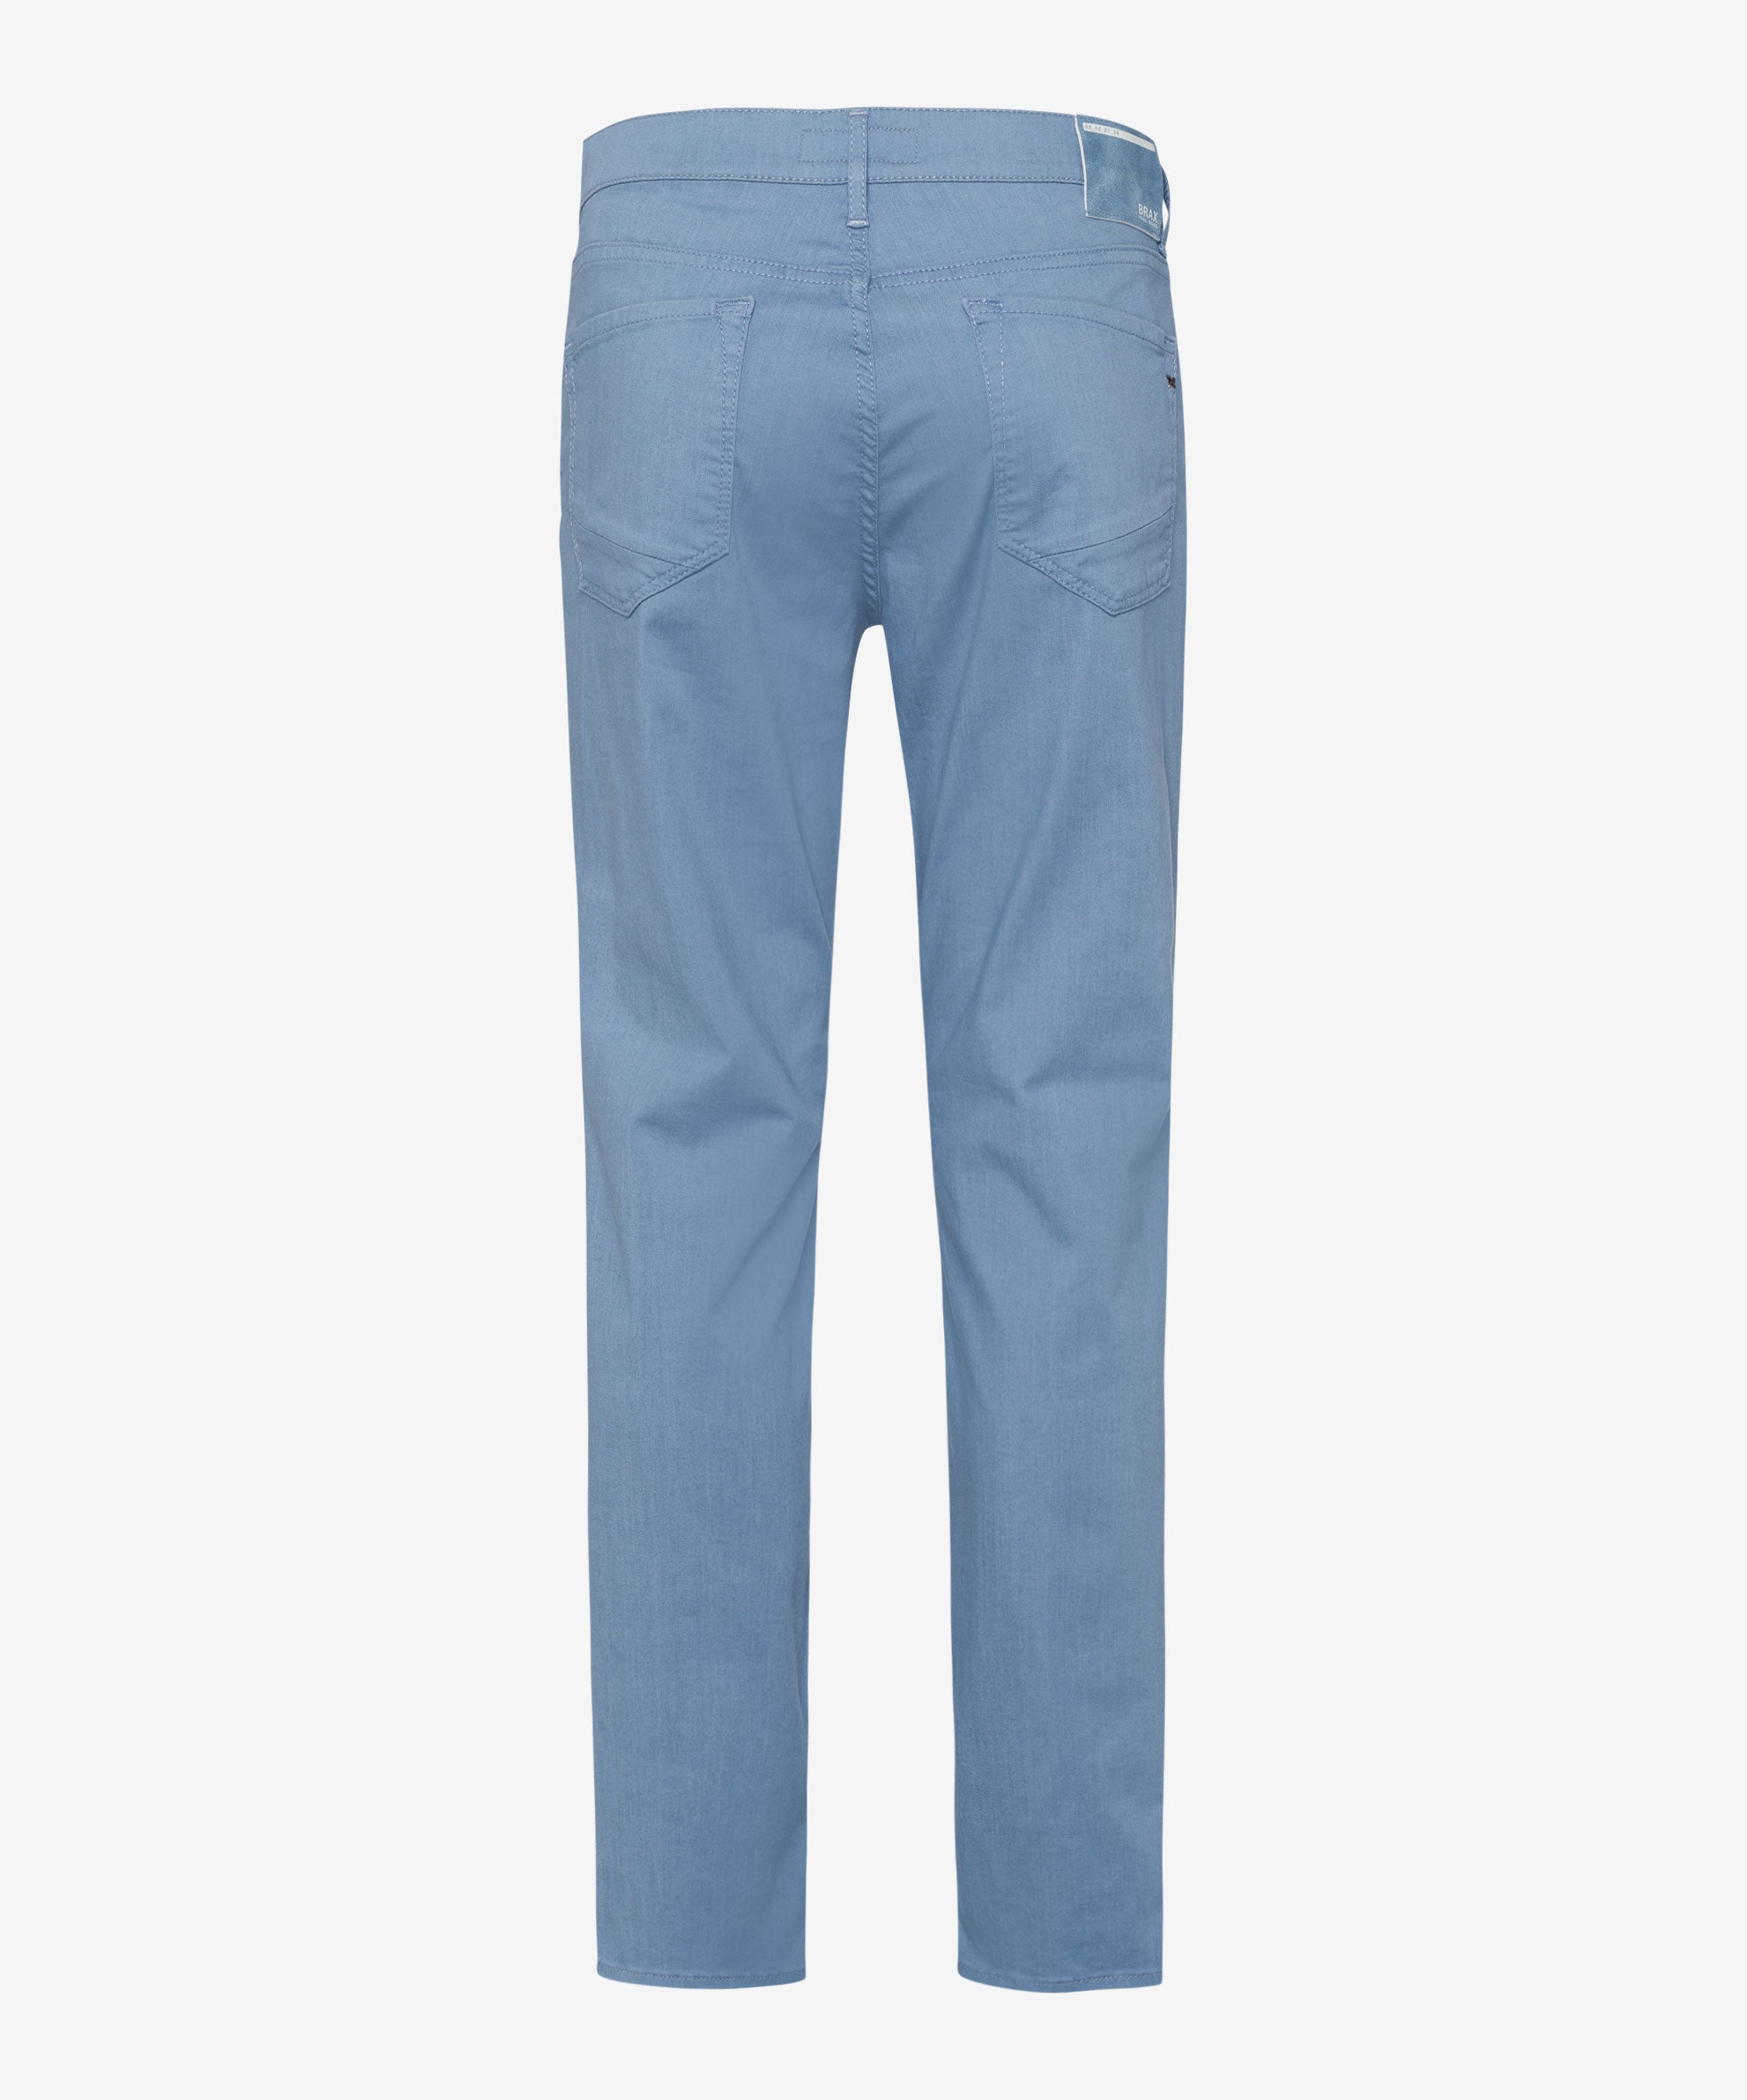 Seattle BRAX Company Thread Pocket Pants Modern Chuck – 5 Fit Hi-Flex Stretch